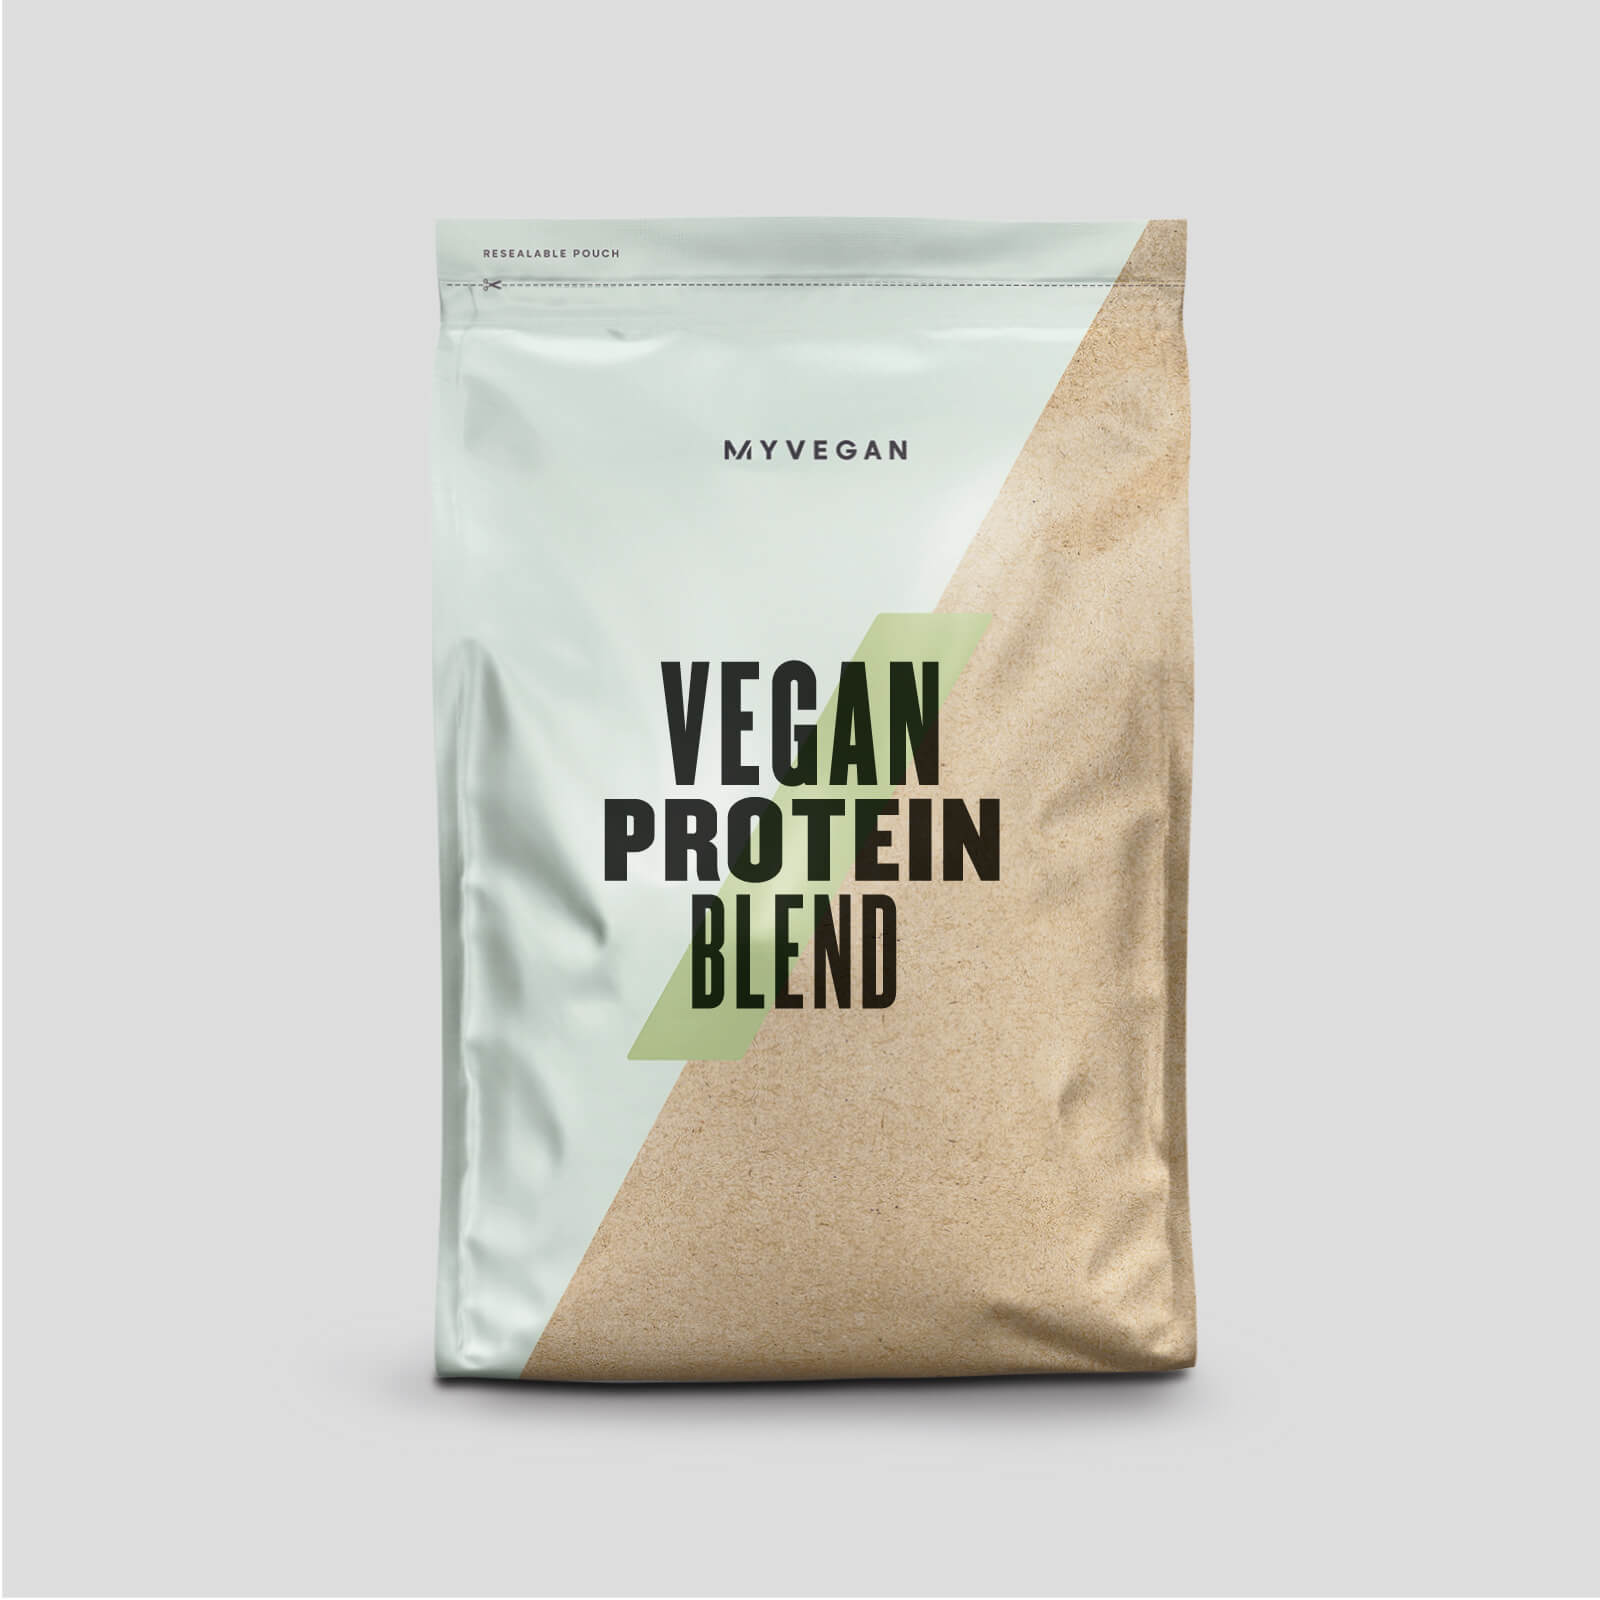 Myvegan Vegan Protein Blend - 1kg - Chocolate